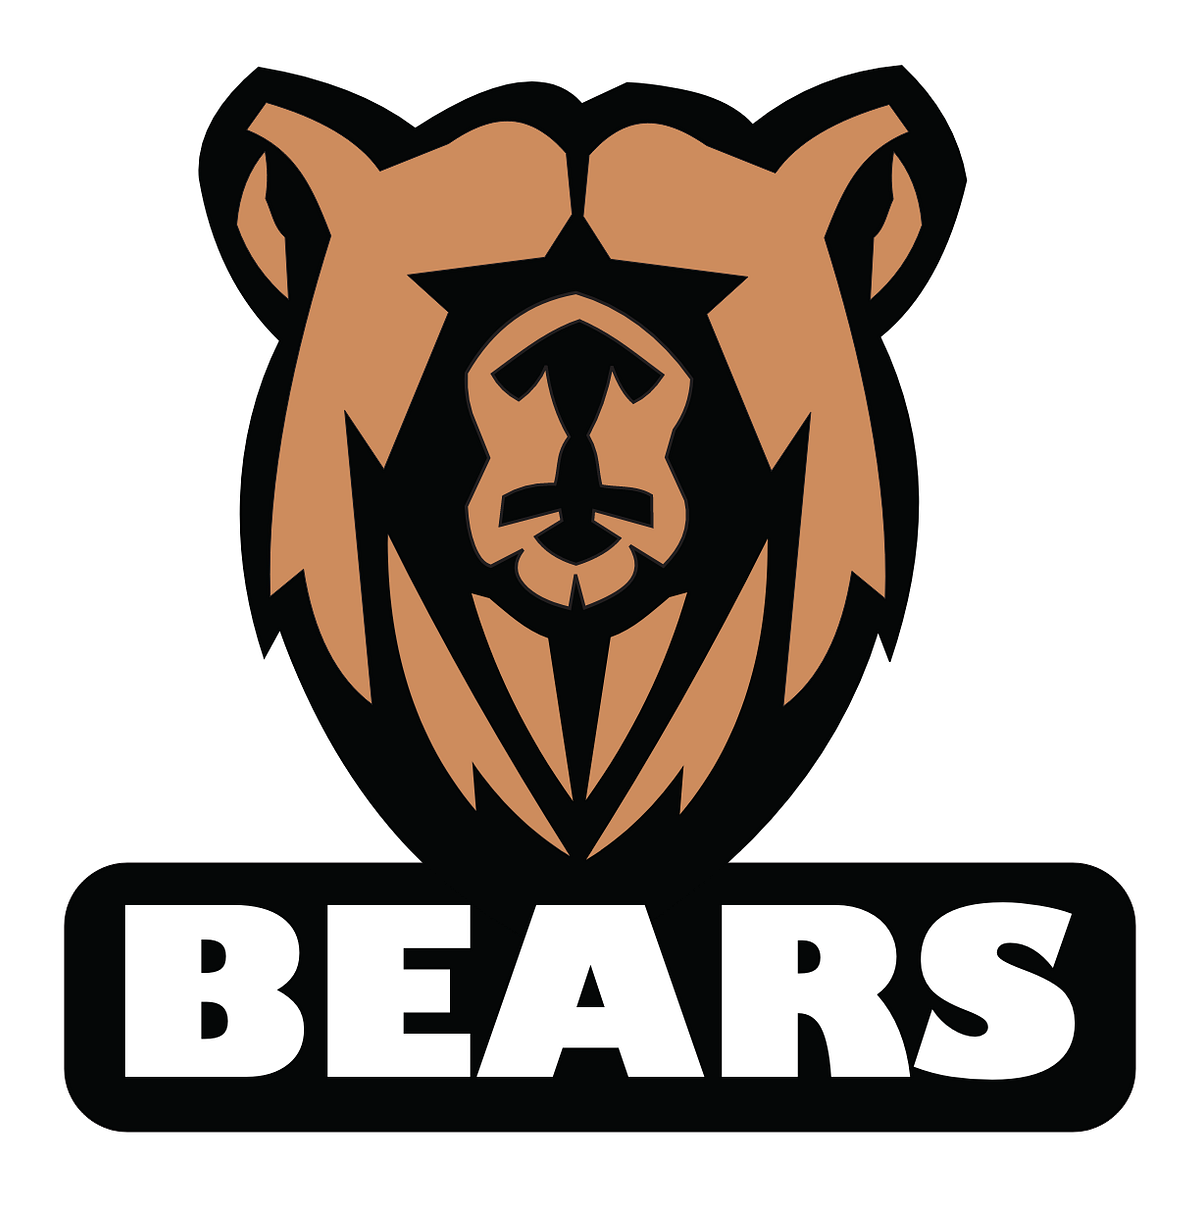 Bears Logo by Veronica Saldaña on Dribbble